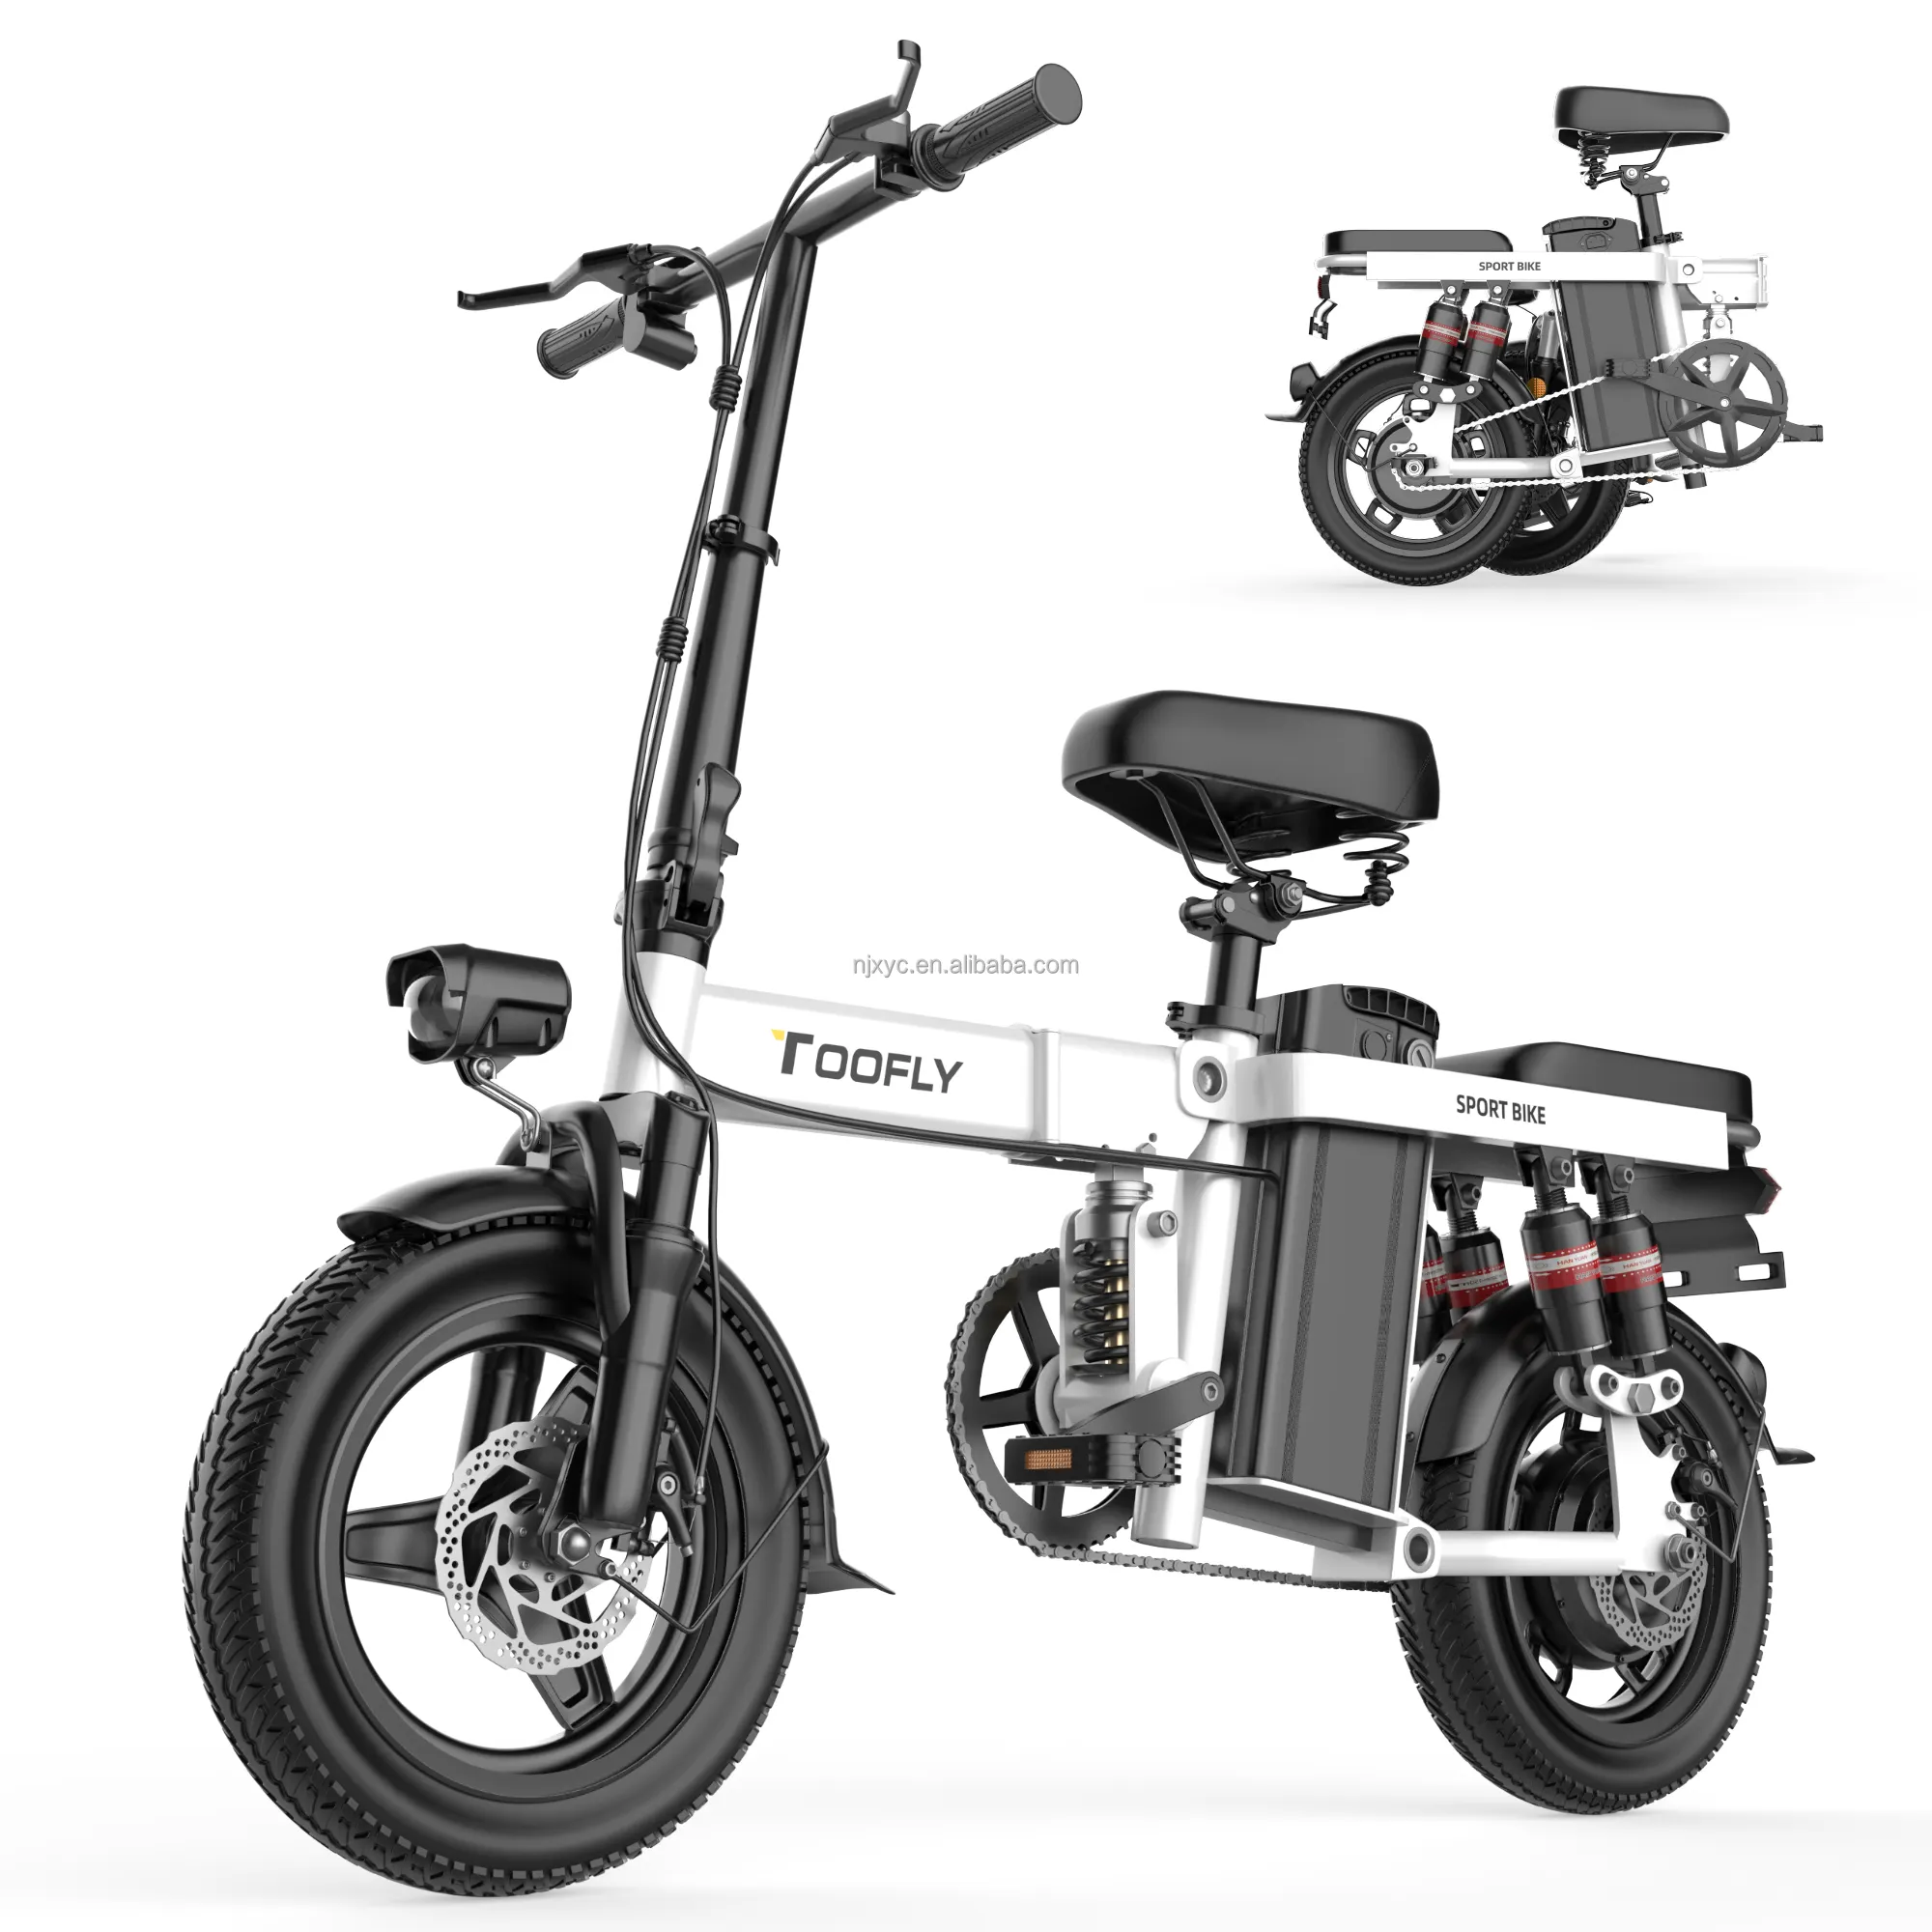 थोक फैट टायर इलेक्ट्रिक बाइक फोल्डिंग इलेक्ट्रिक किड्स बाइक साइकिल वयस्कों के लिए ई-बाइक साइकिल फैट टायर इलेक्ट्रिक साइकिल ई बाइक